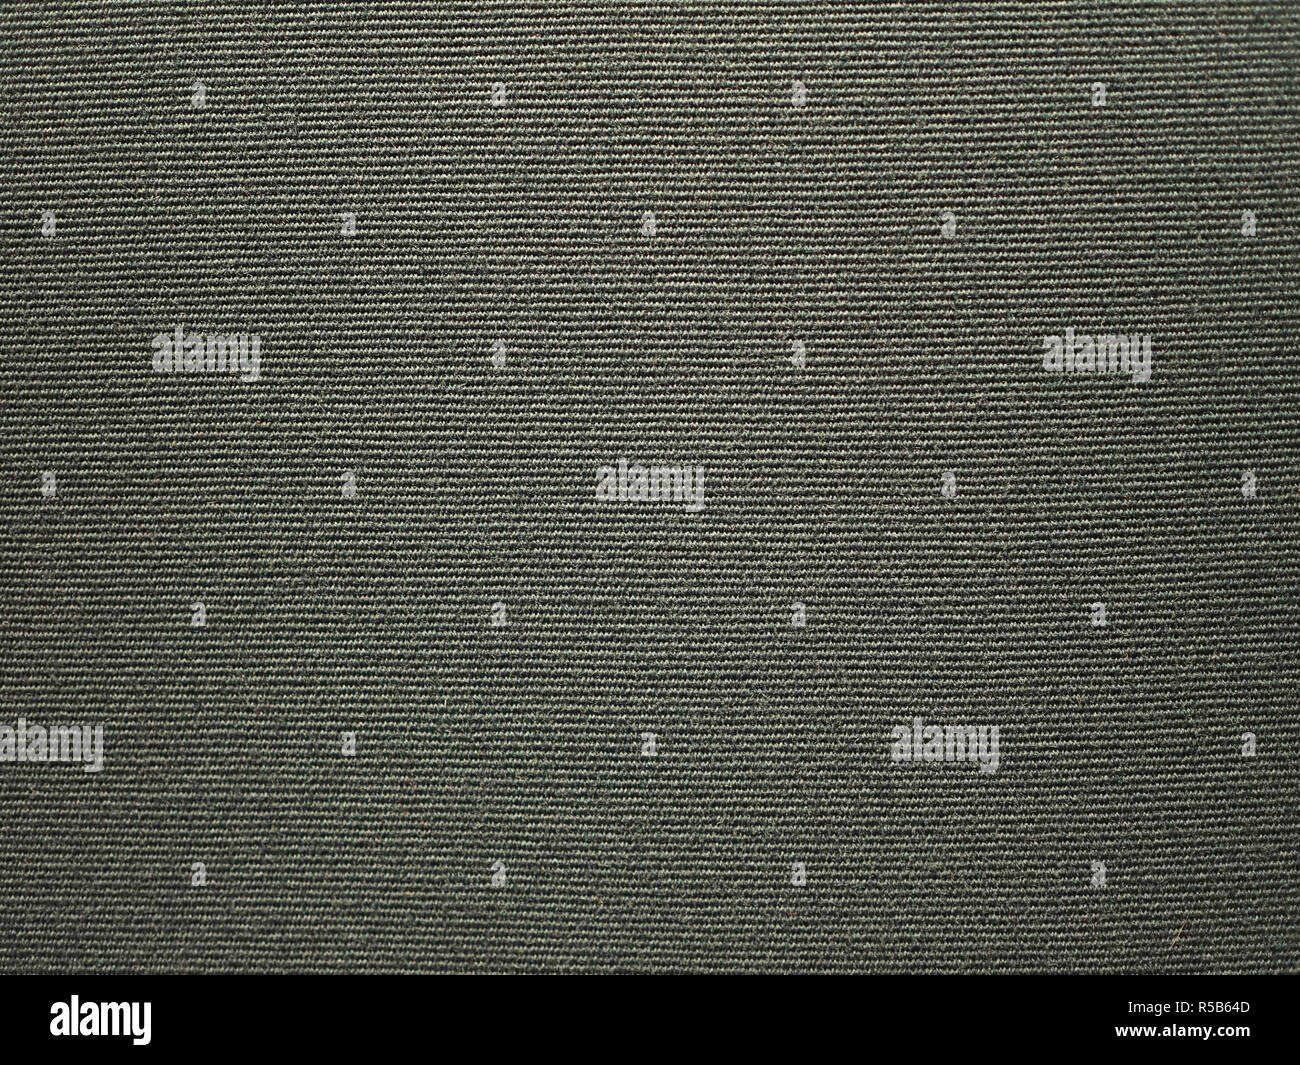 dark olive green fabric texture background Stock Photo - Alamy